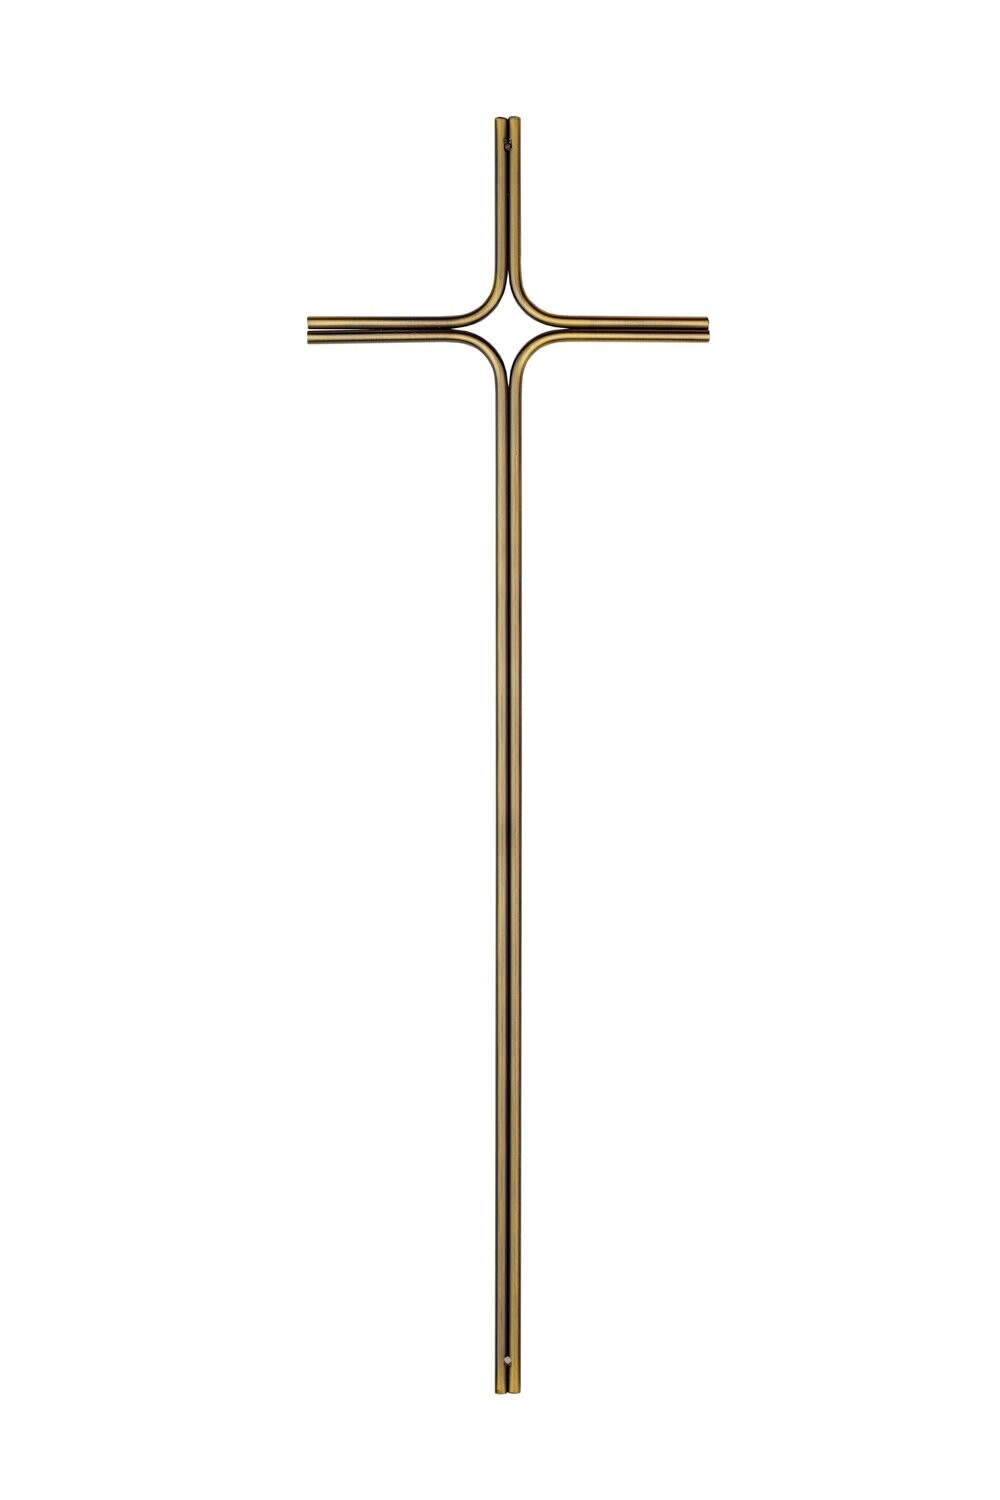 Cross for coffin in steel series 558 vintage brass finishing